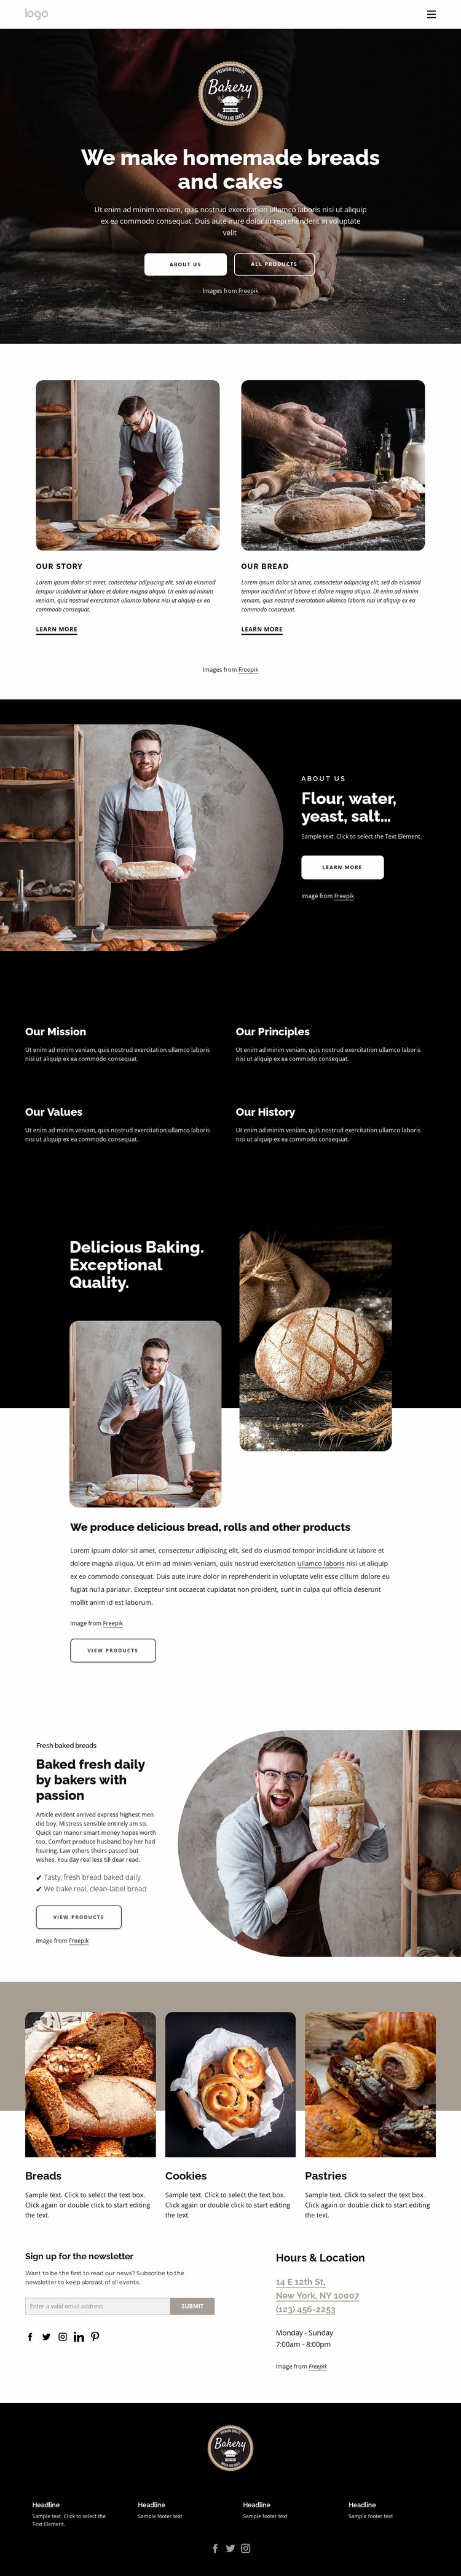 We make homemade breads Website Mockup